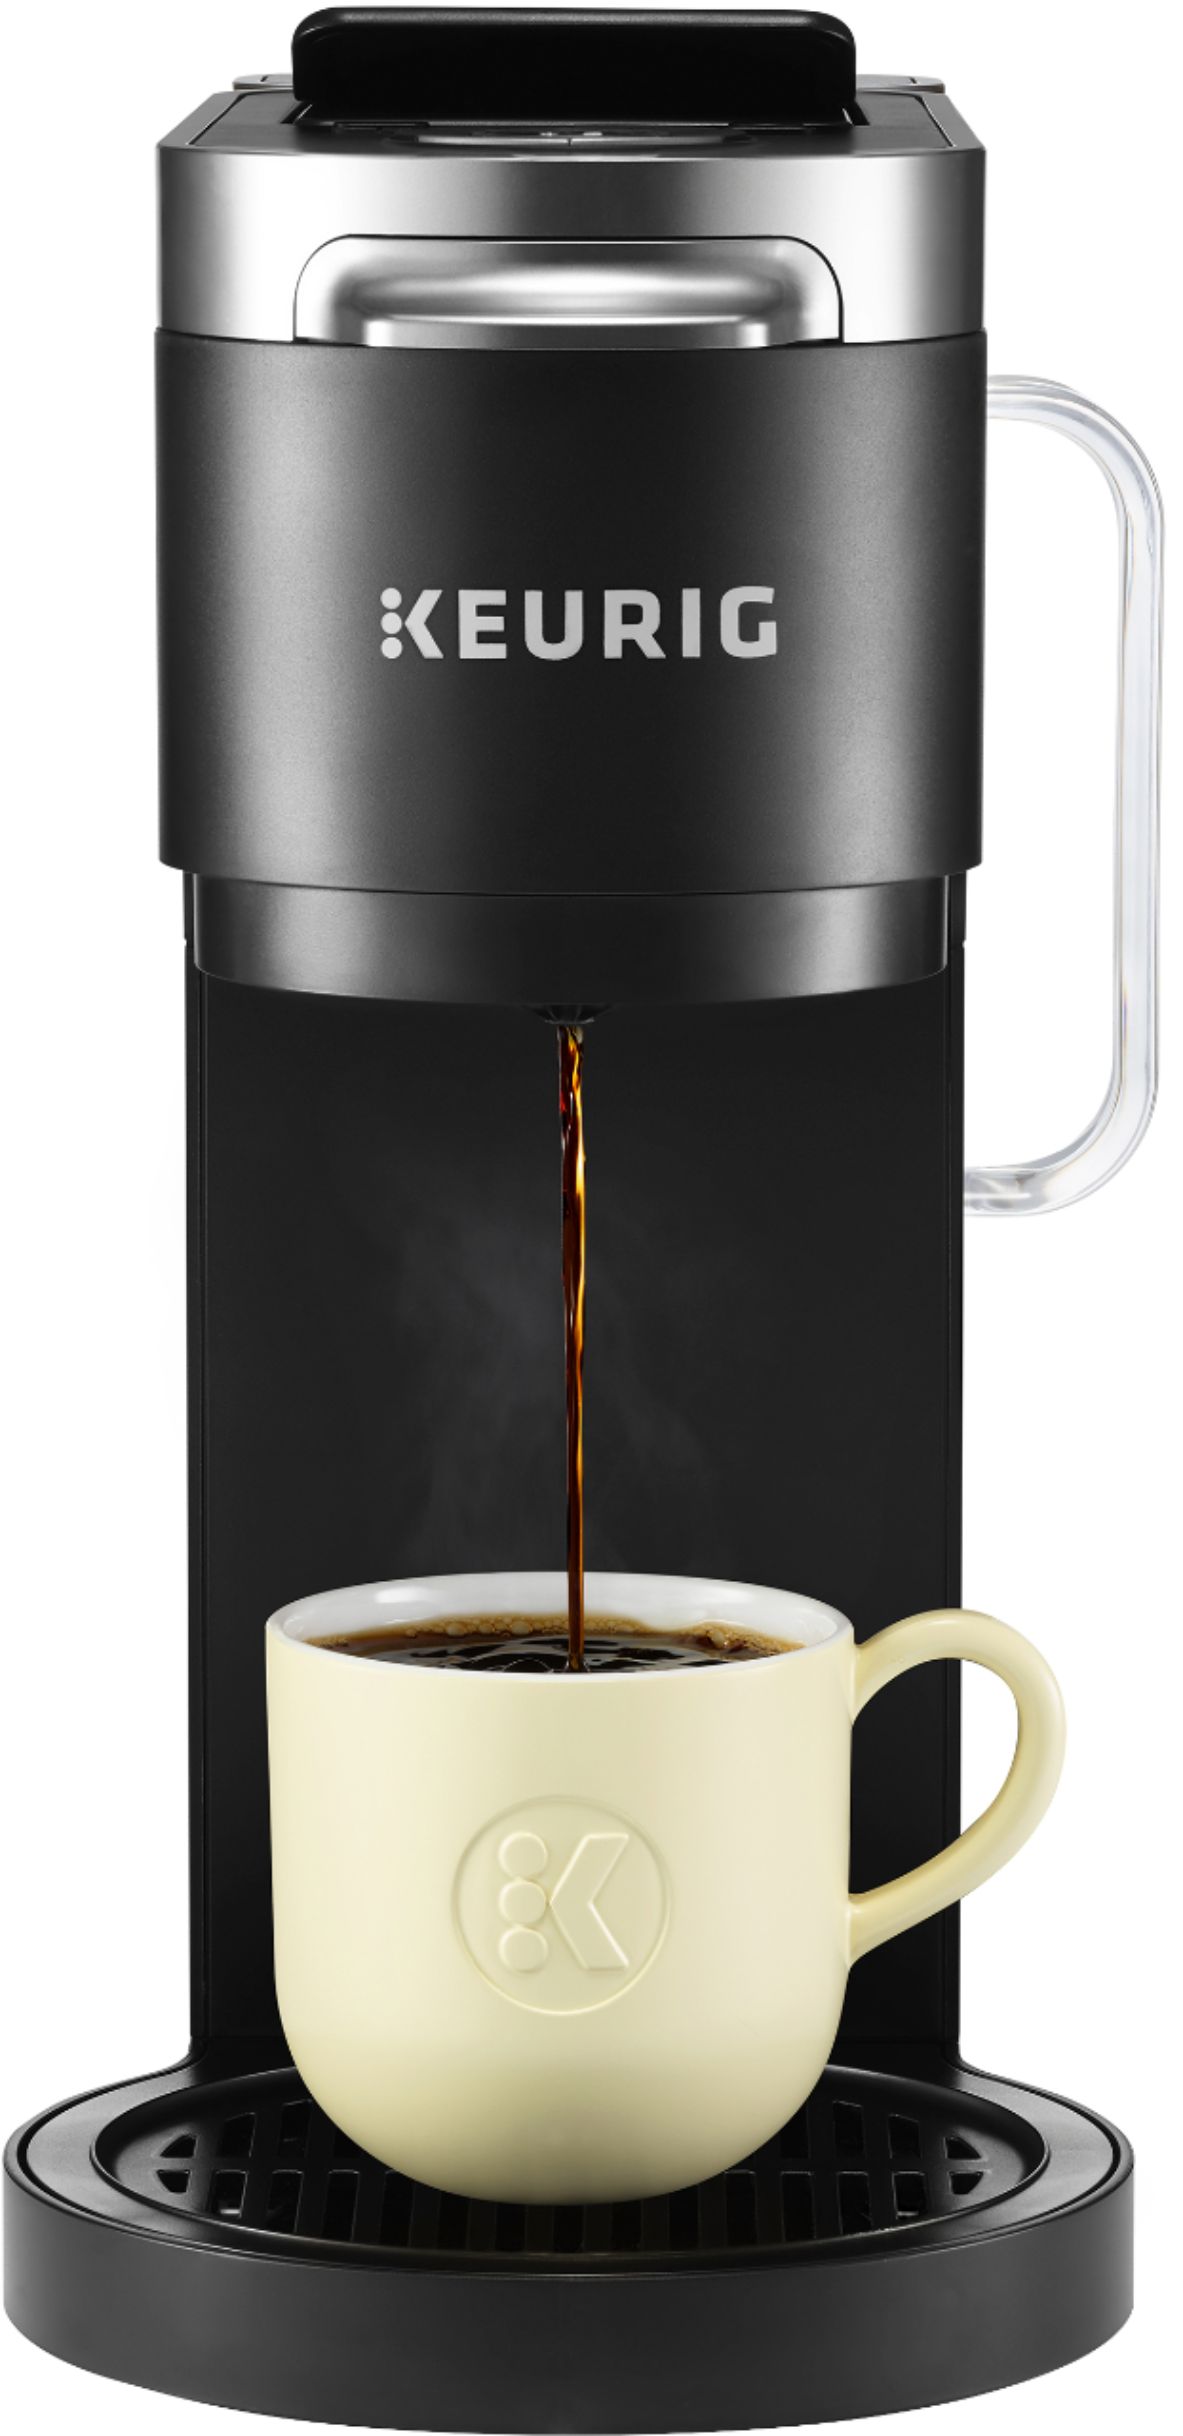 Keurig K-Duo Plus Single Serve & Carafe Coffee Maker 